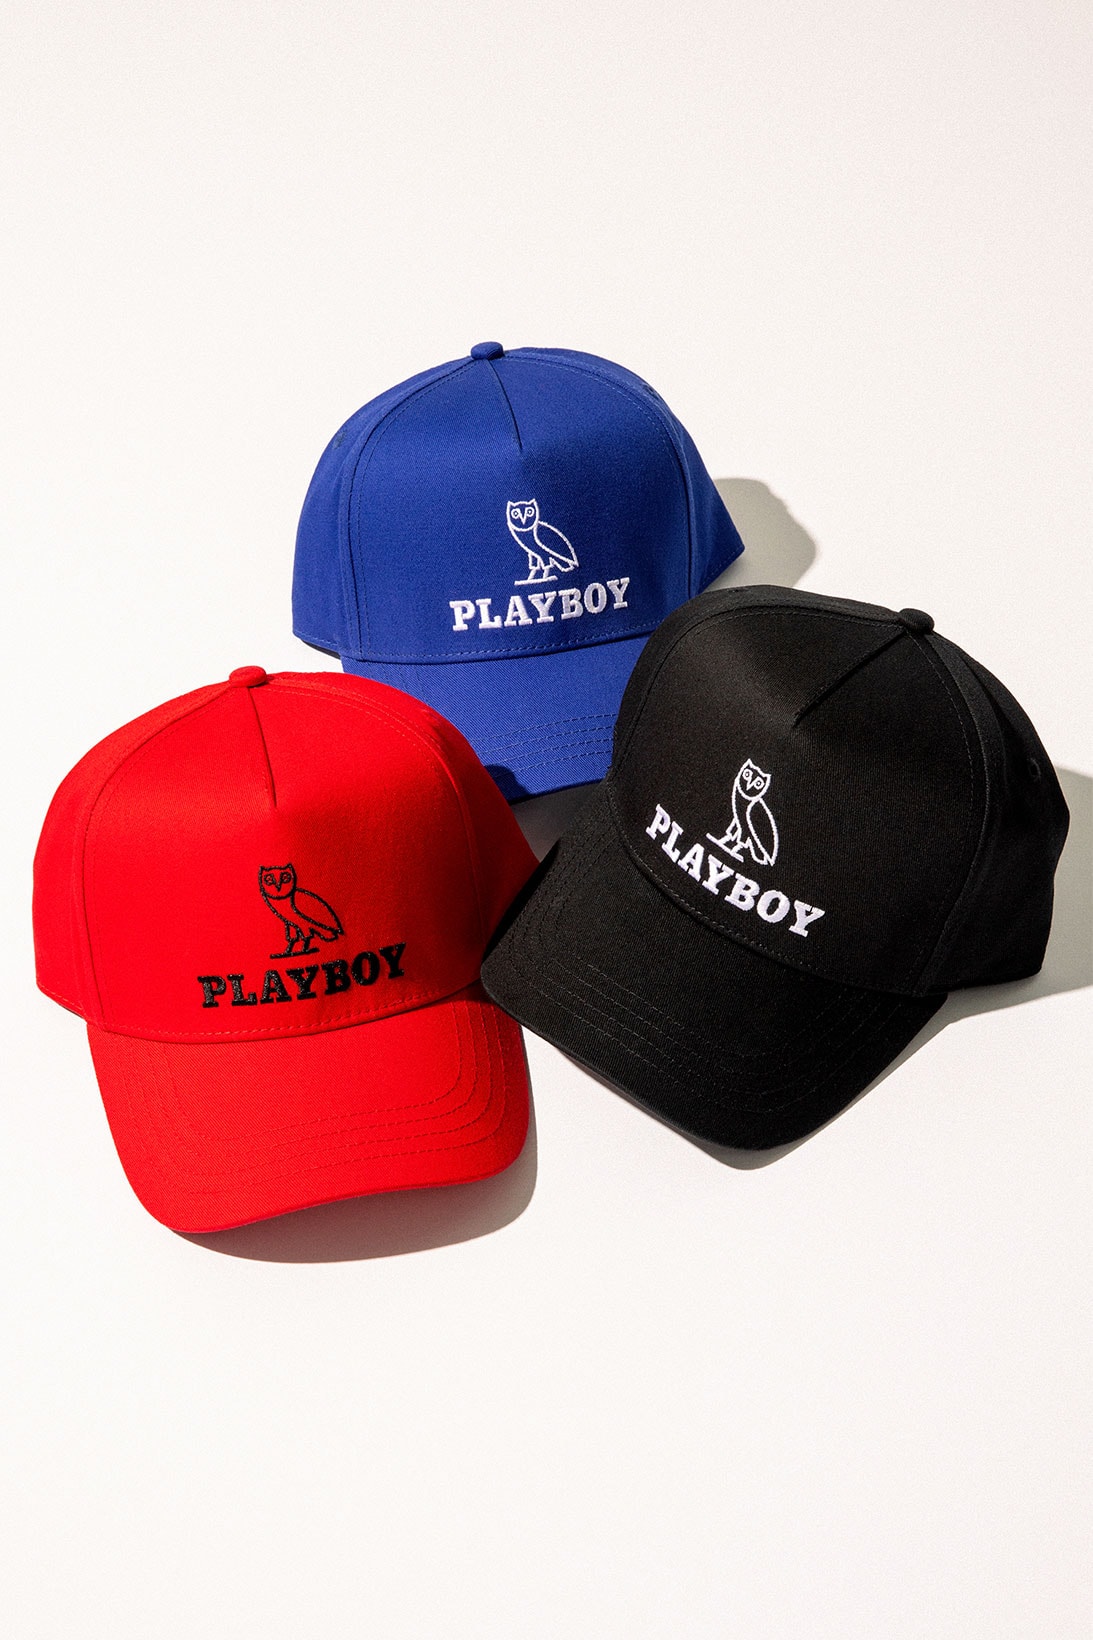 Drake OVO Playboy Collaboration Symbols of Prestige Capsule Release Info